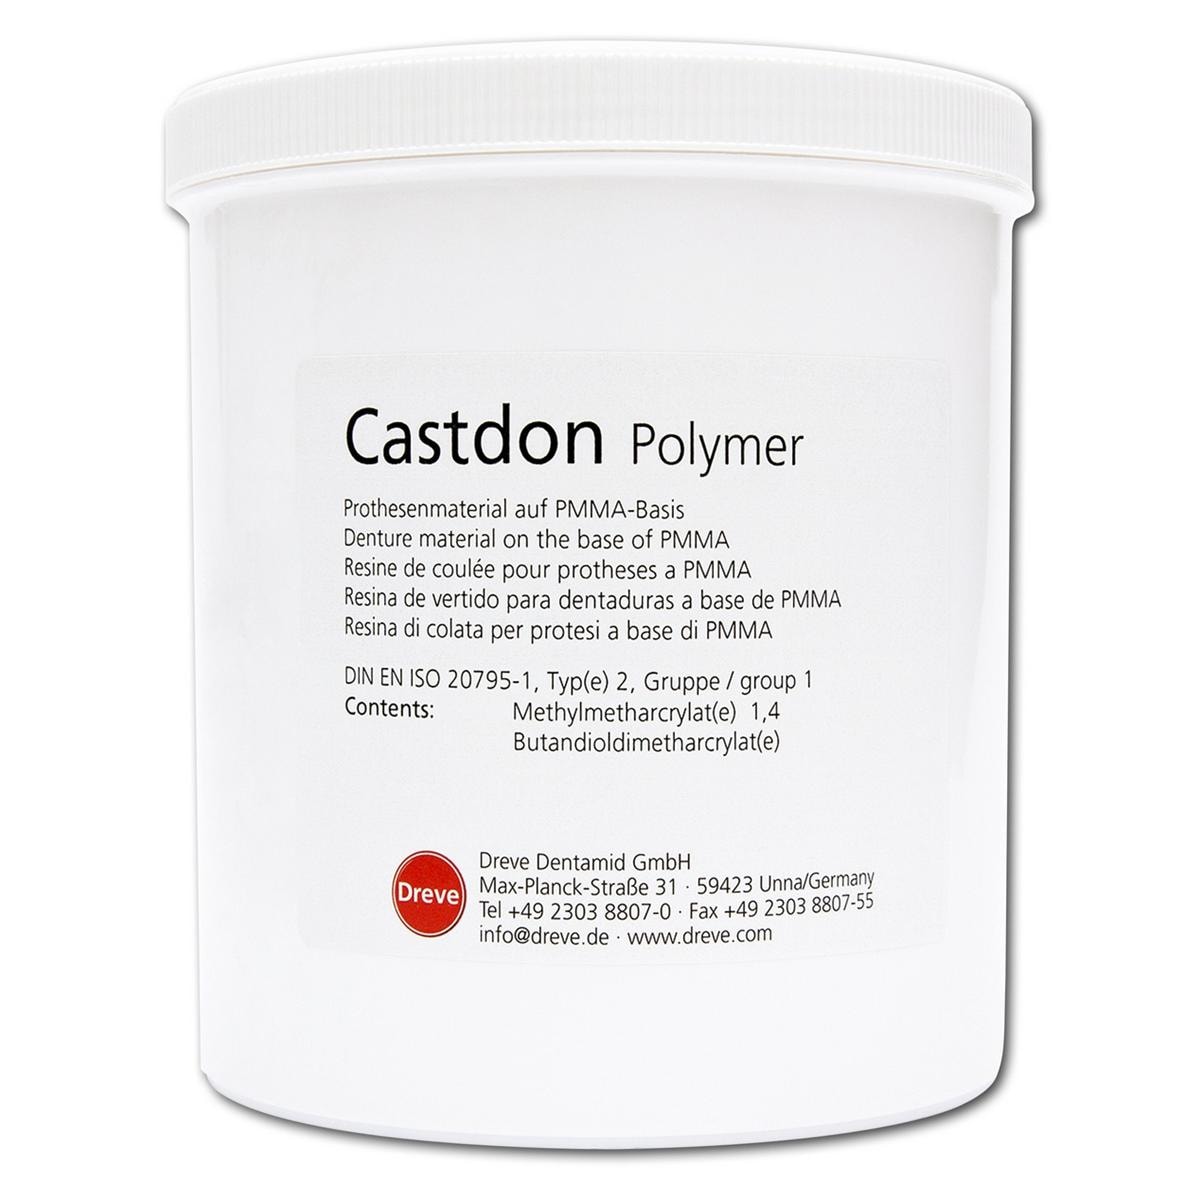 Castdon Pulver - Rosa-opak, Packung 1.200 g